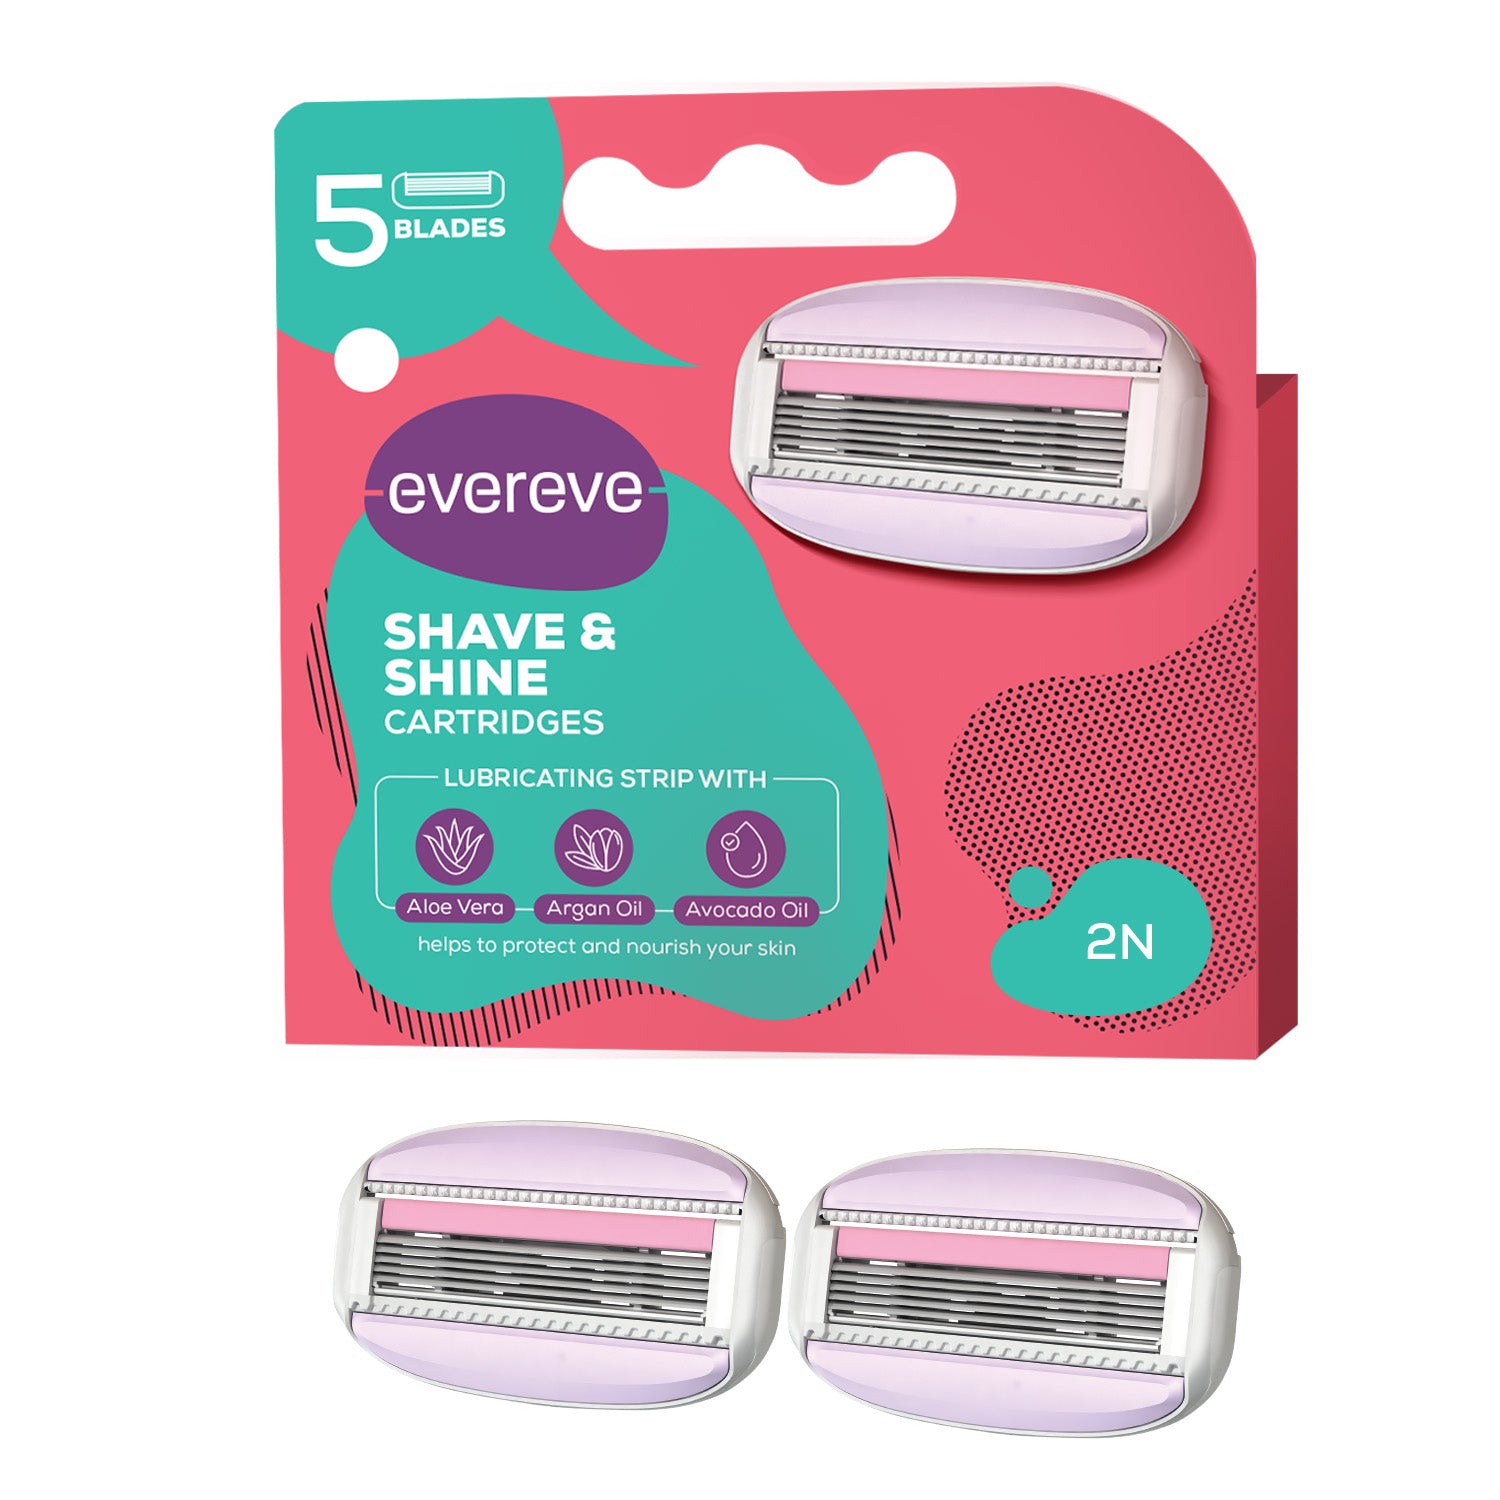 Evereve Shave & Shine Refill Blades, Cartridges for Razors, Pack of 2